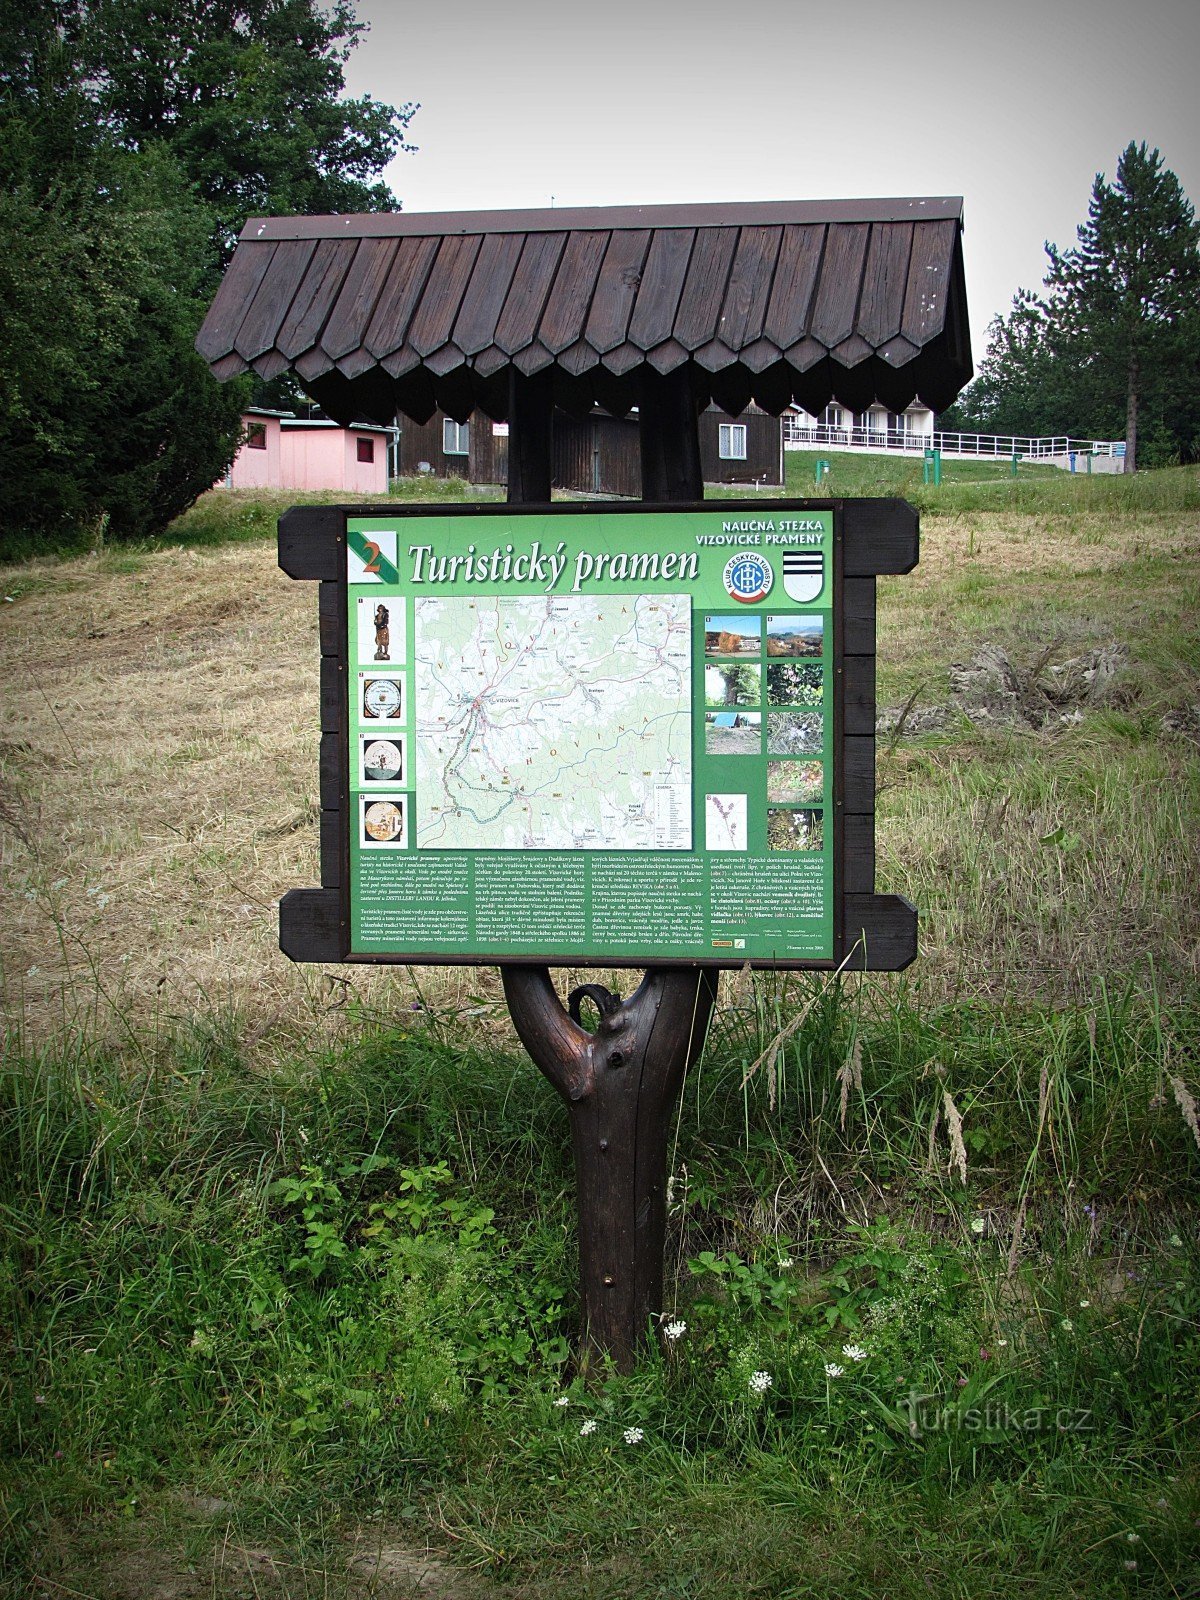 Recreation area REVIKA near Vizovice